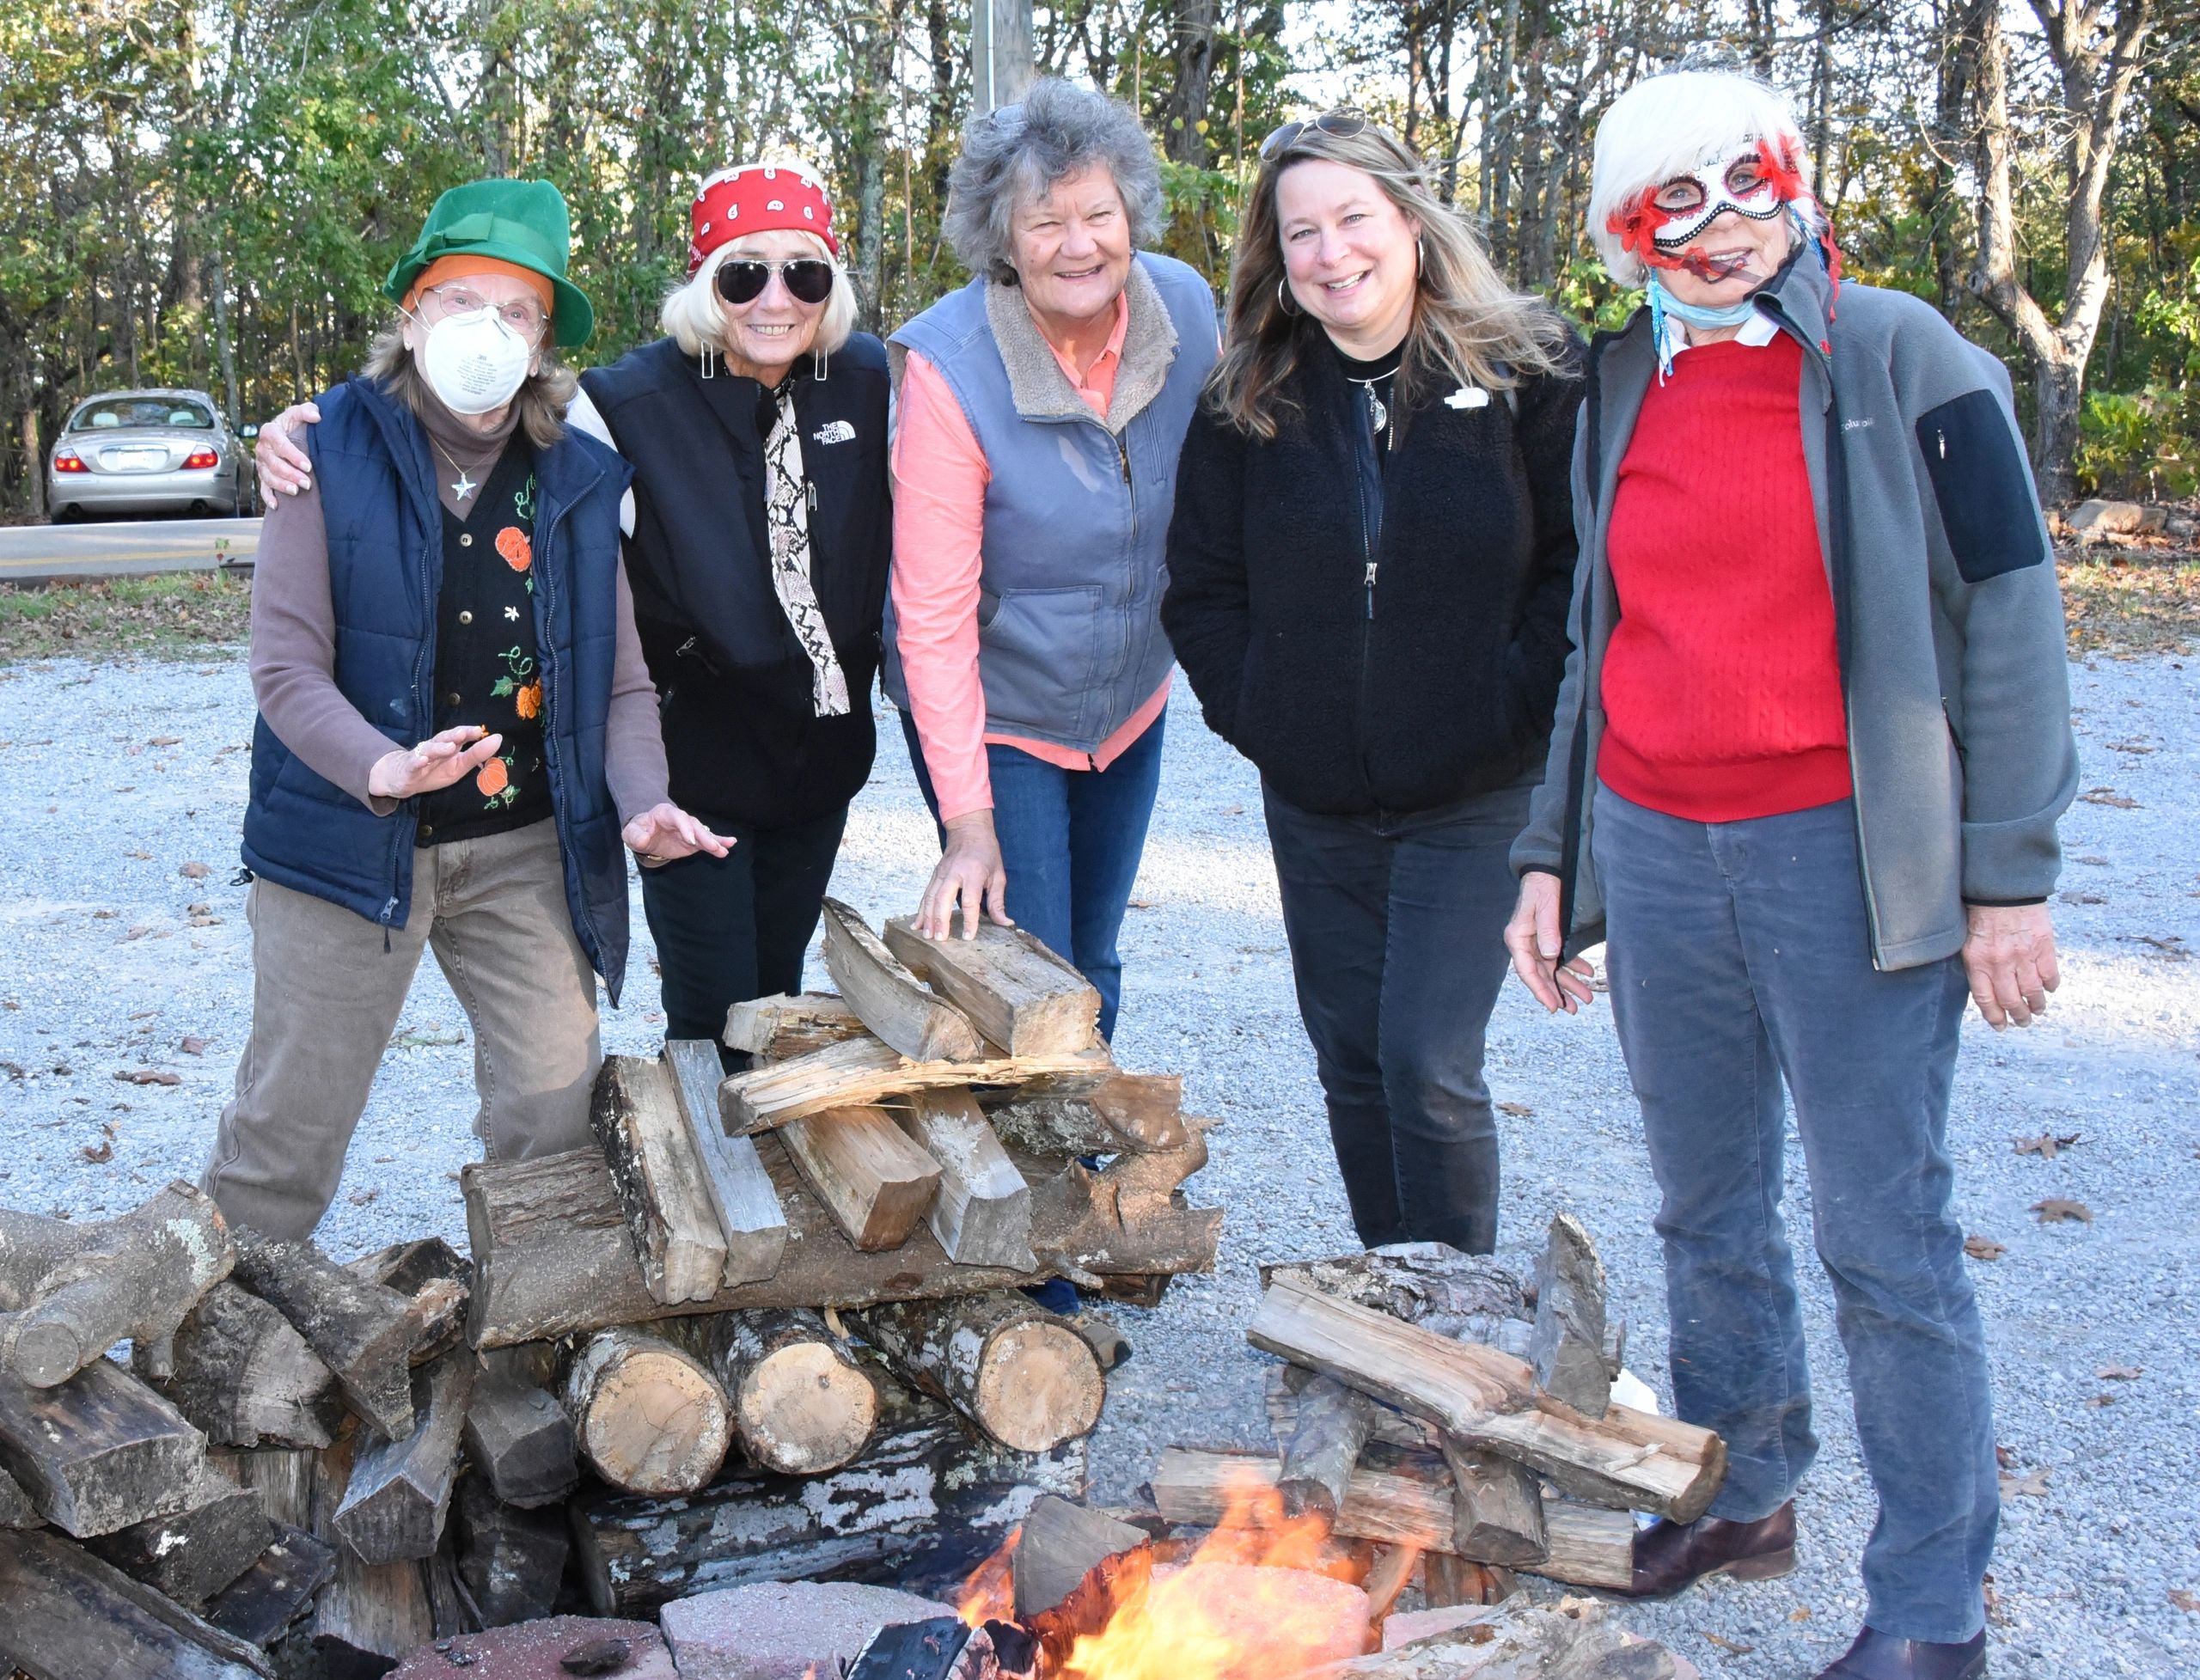 Bonfire committee: Karen, Rita, Hilda, Jeannie, Carolyn